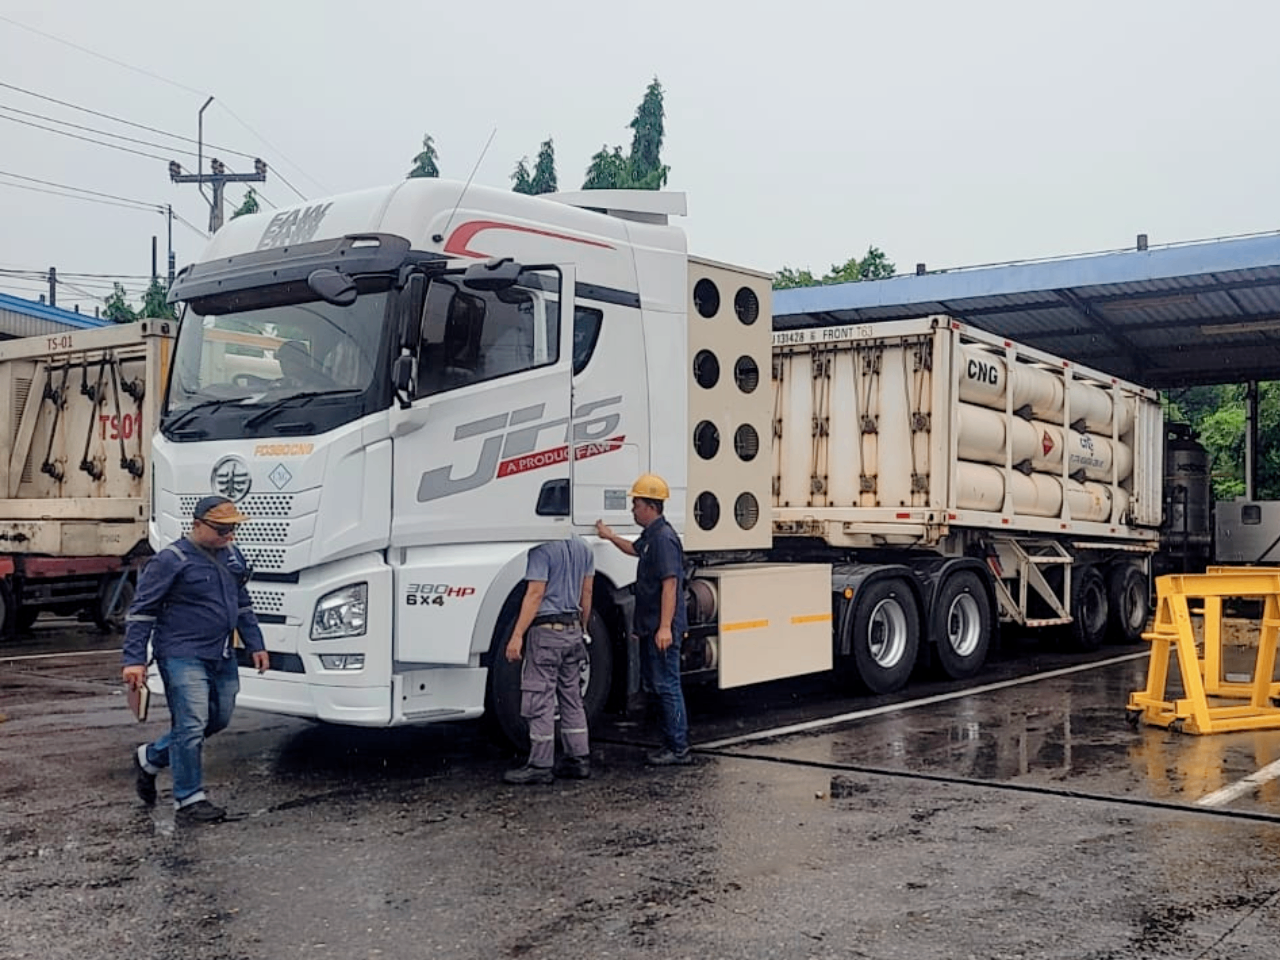 "PT Citra Nusantara Gemilang Tbk's Response to Environmental Challenges Through Gas-Powered Trucks"